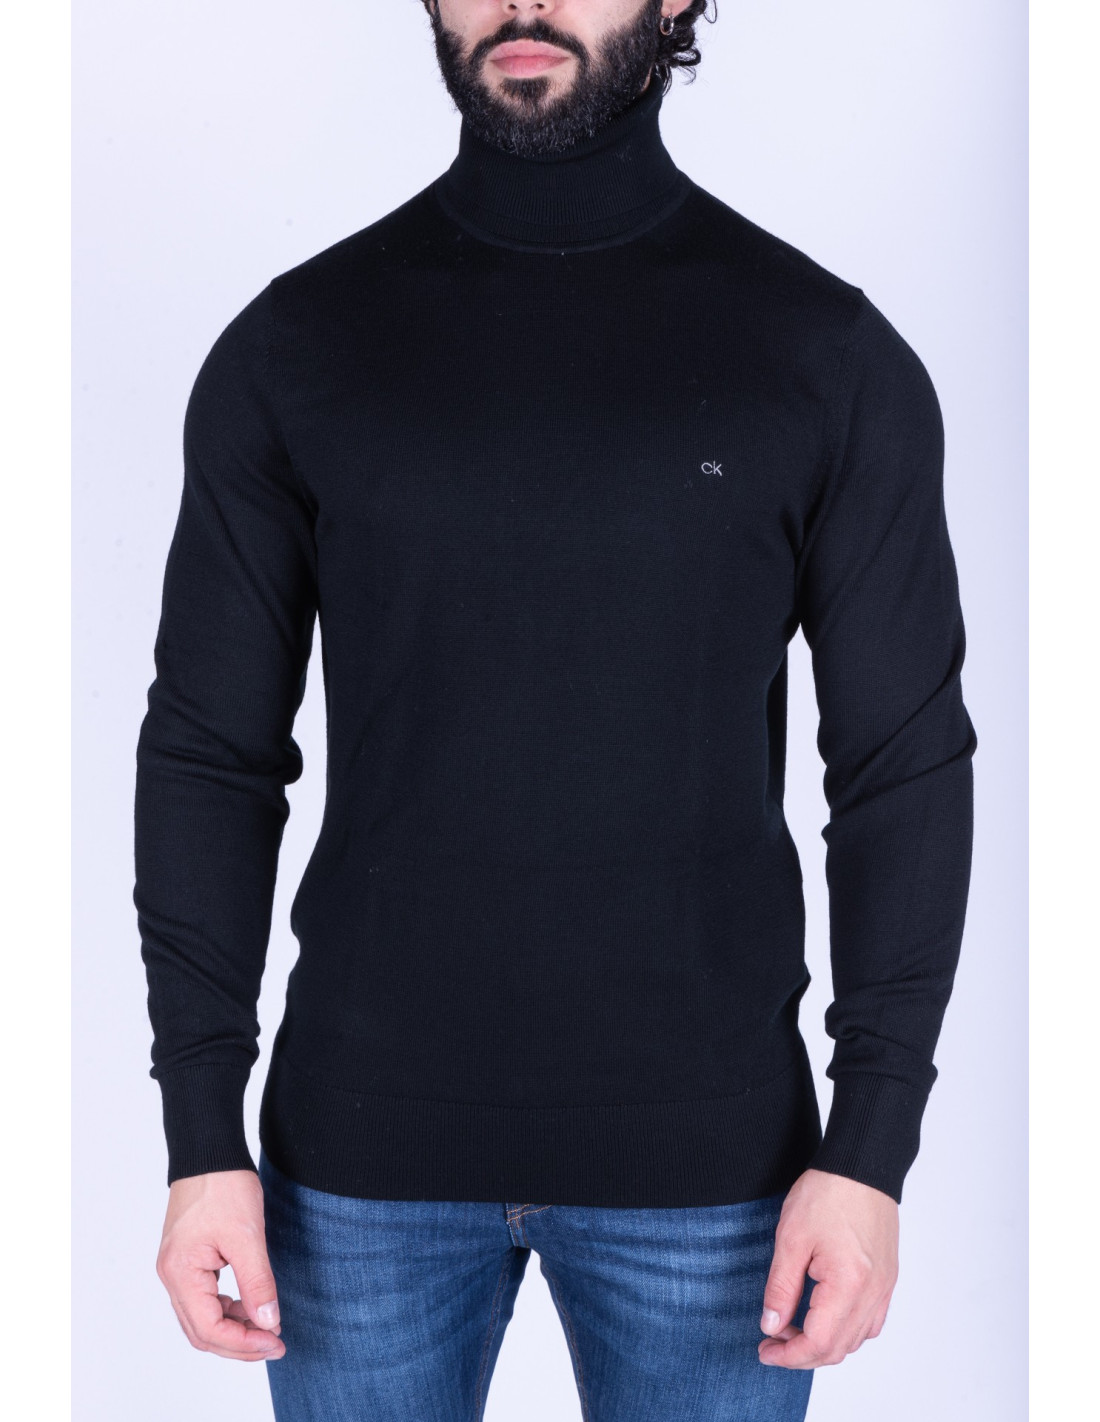 Superior Wool Black Color Taglia Calvin black Klein sweater XS men\'s